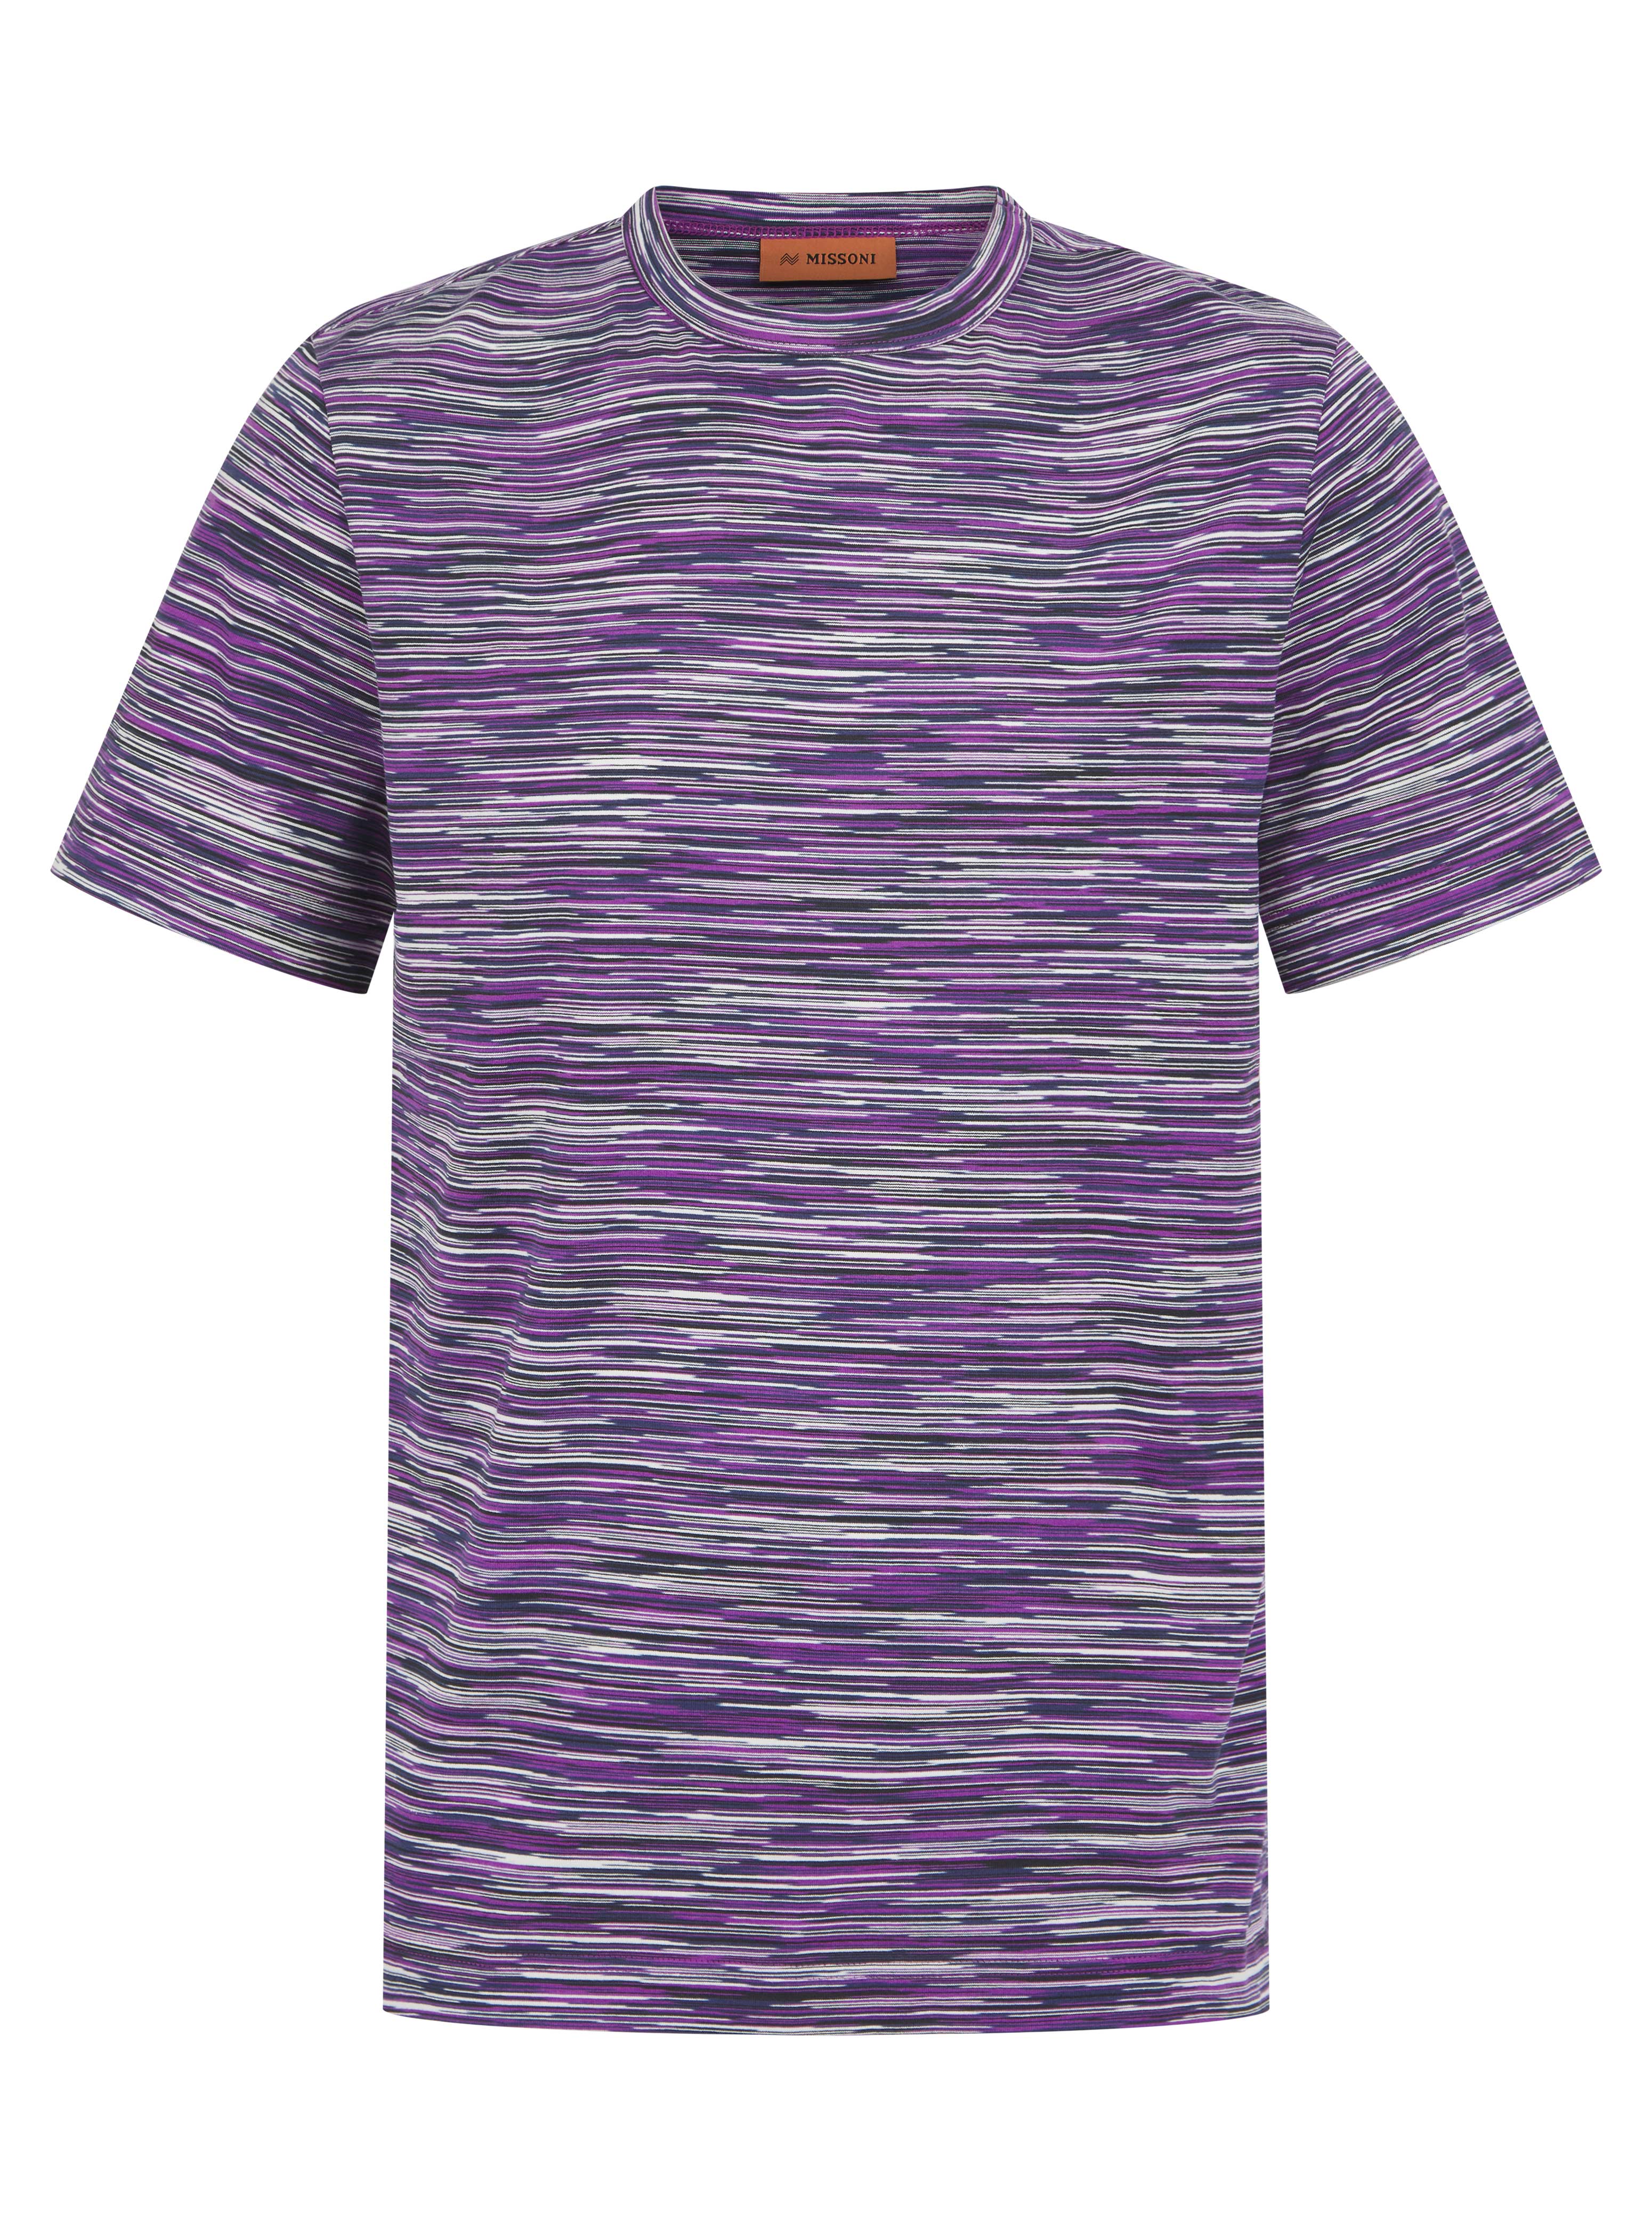 Load image into Gallery viewer, Missoni Stripe T Shirt Purple
